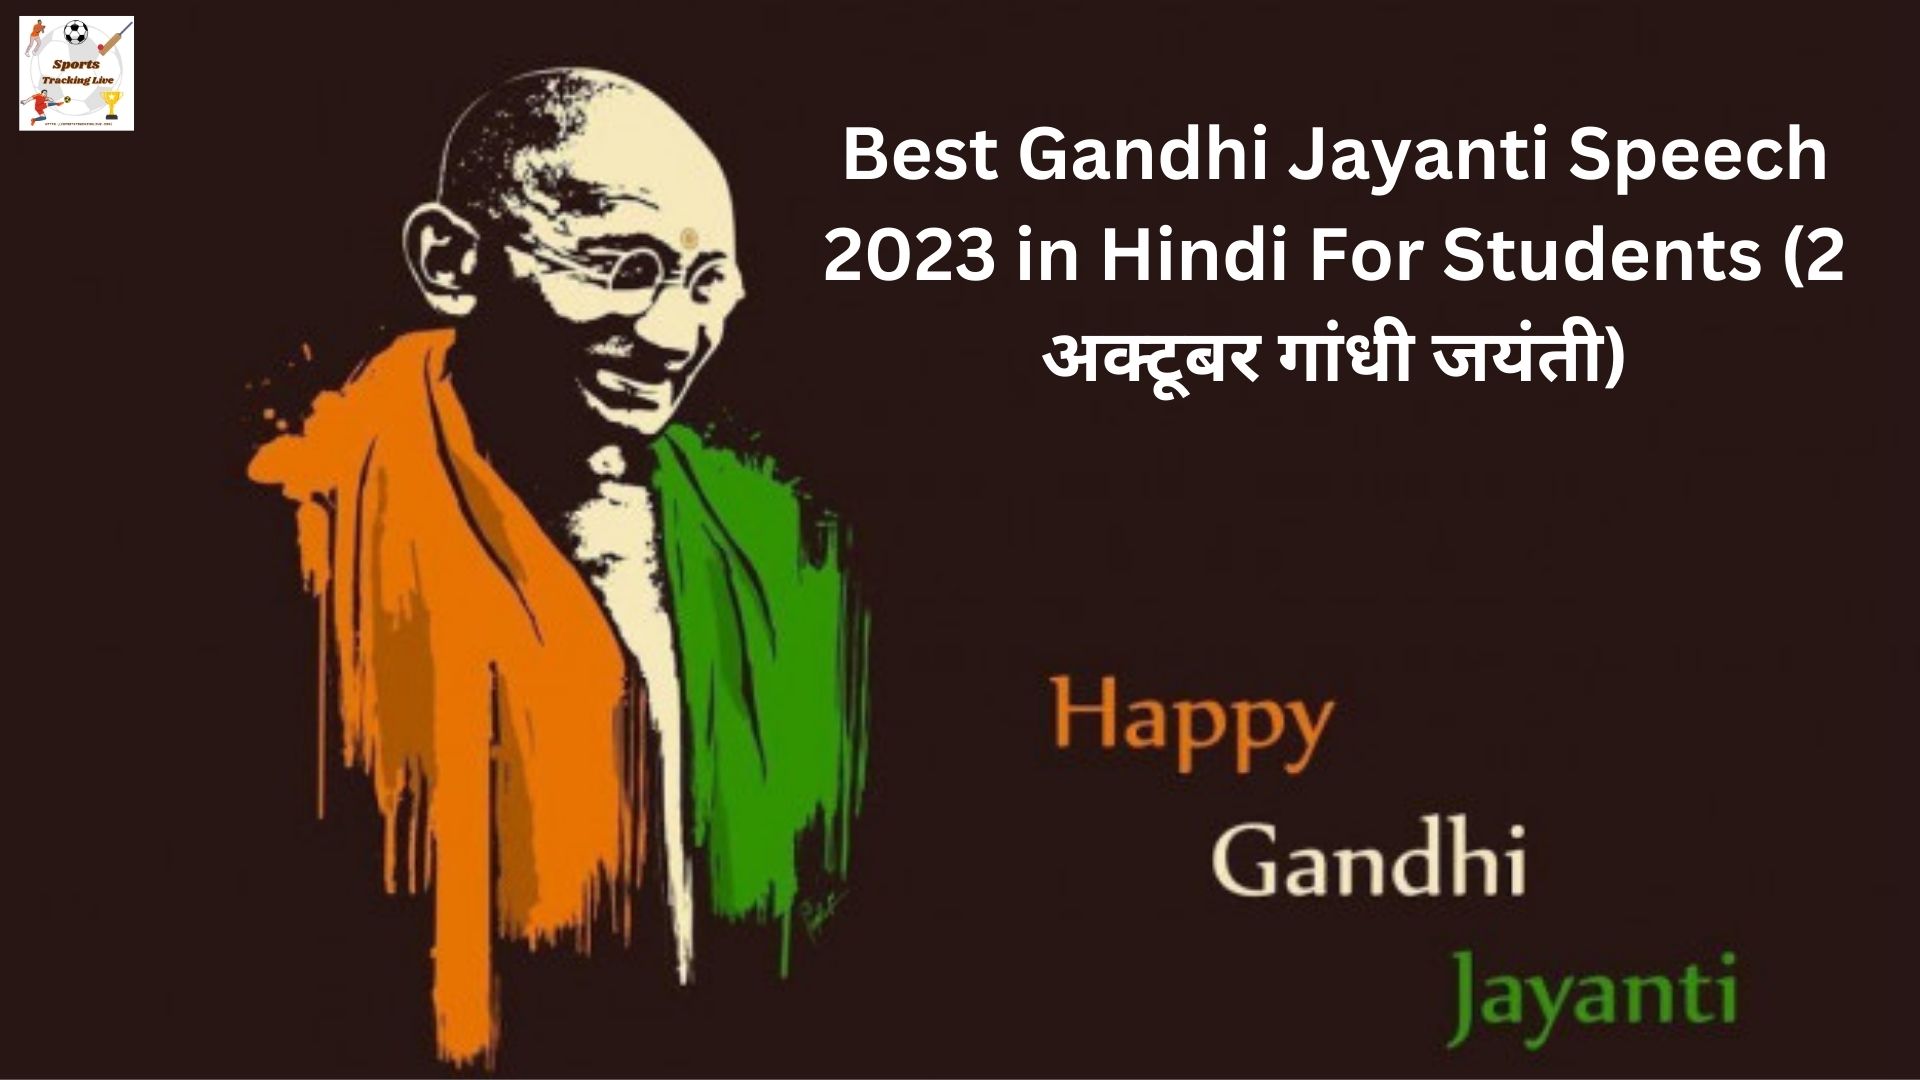 Best Gandhi Jayanti Speech 2023 in Hindi For Students (2 अक्टूबर गांधी जयंती)